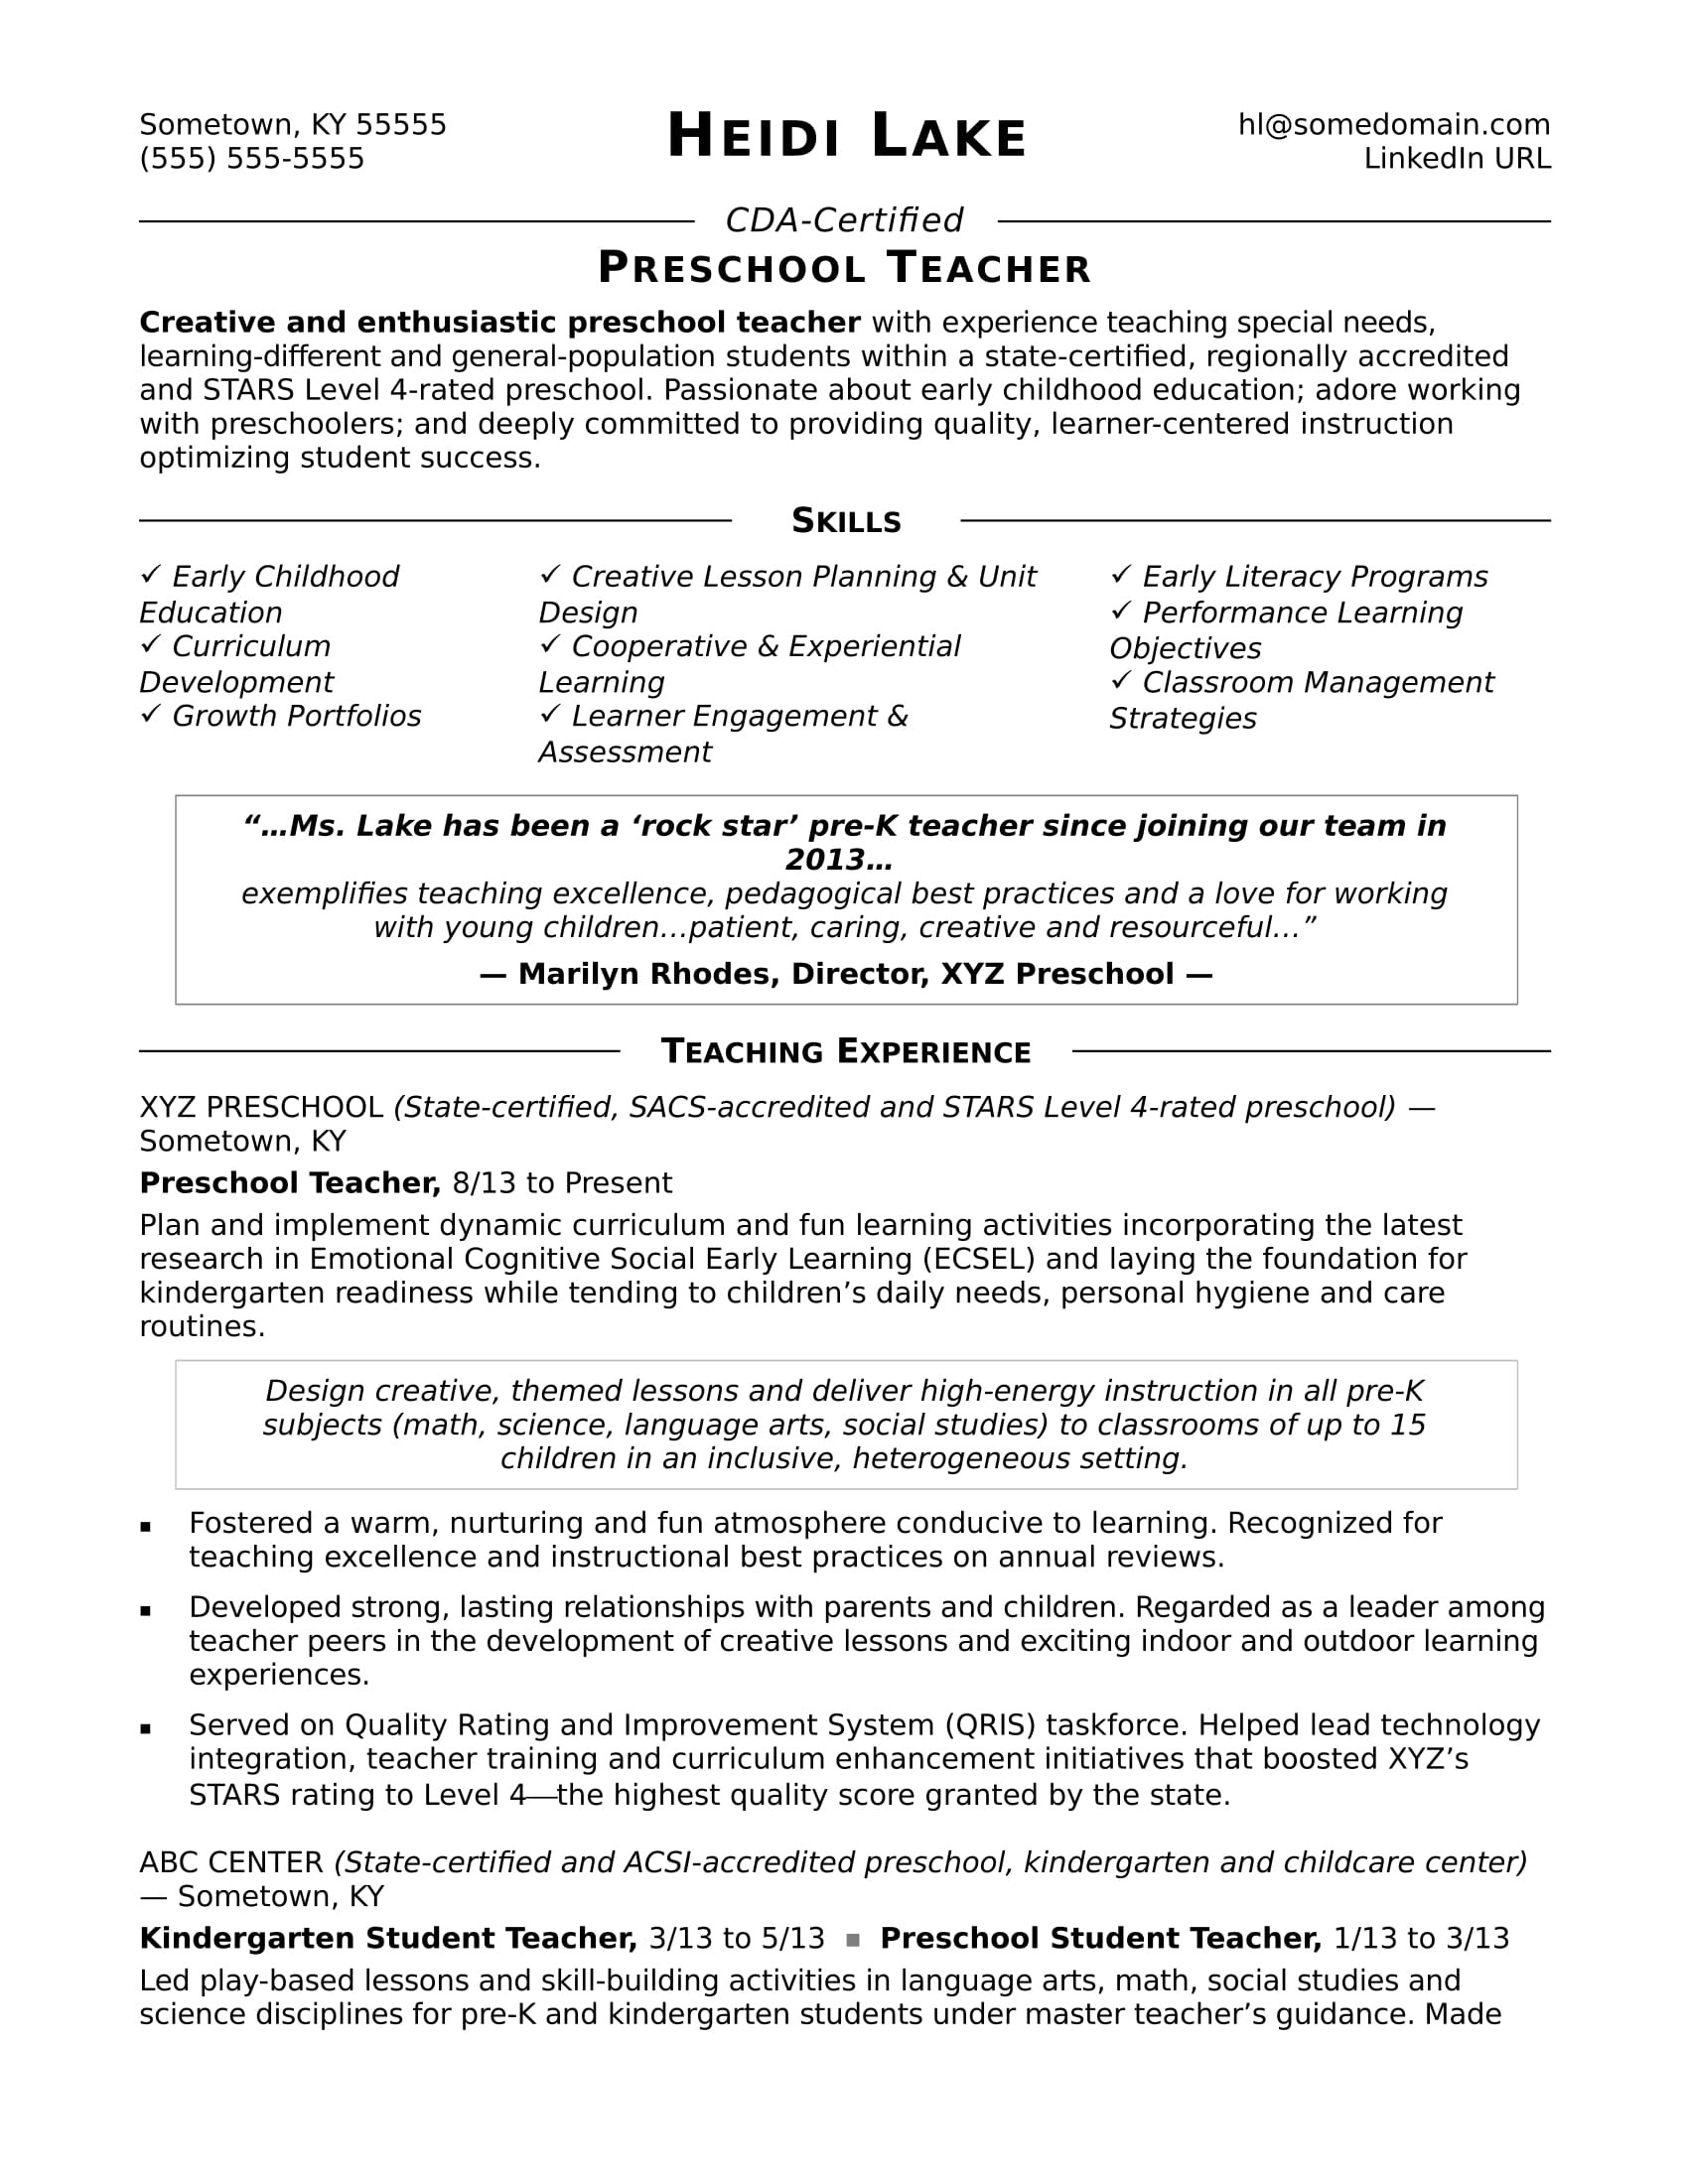 Child Care assistant Teacher Resume Sample Preschool Teacher Resume Sample Monster.com